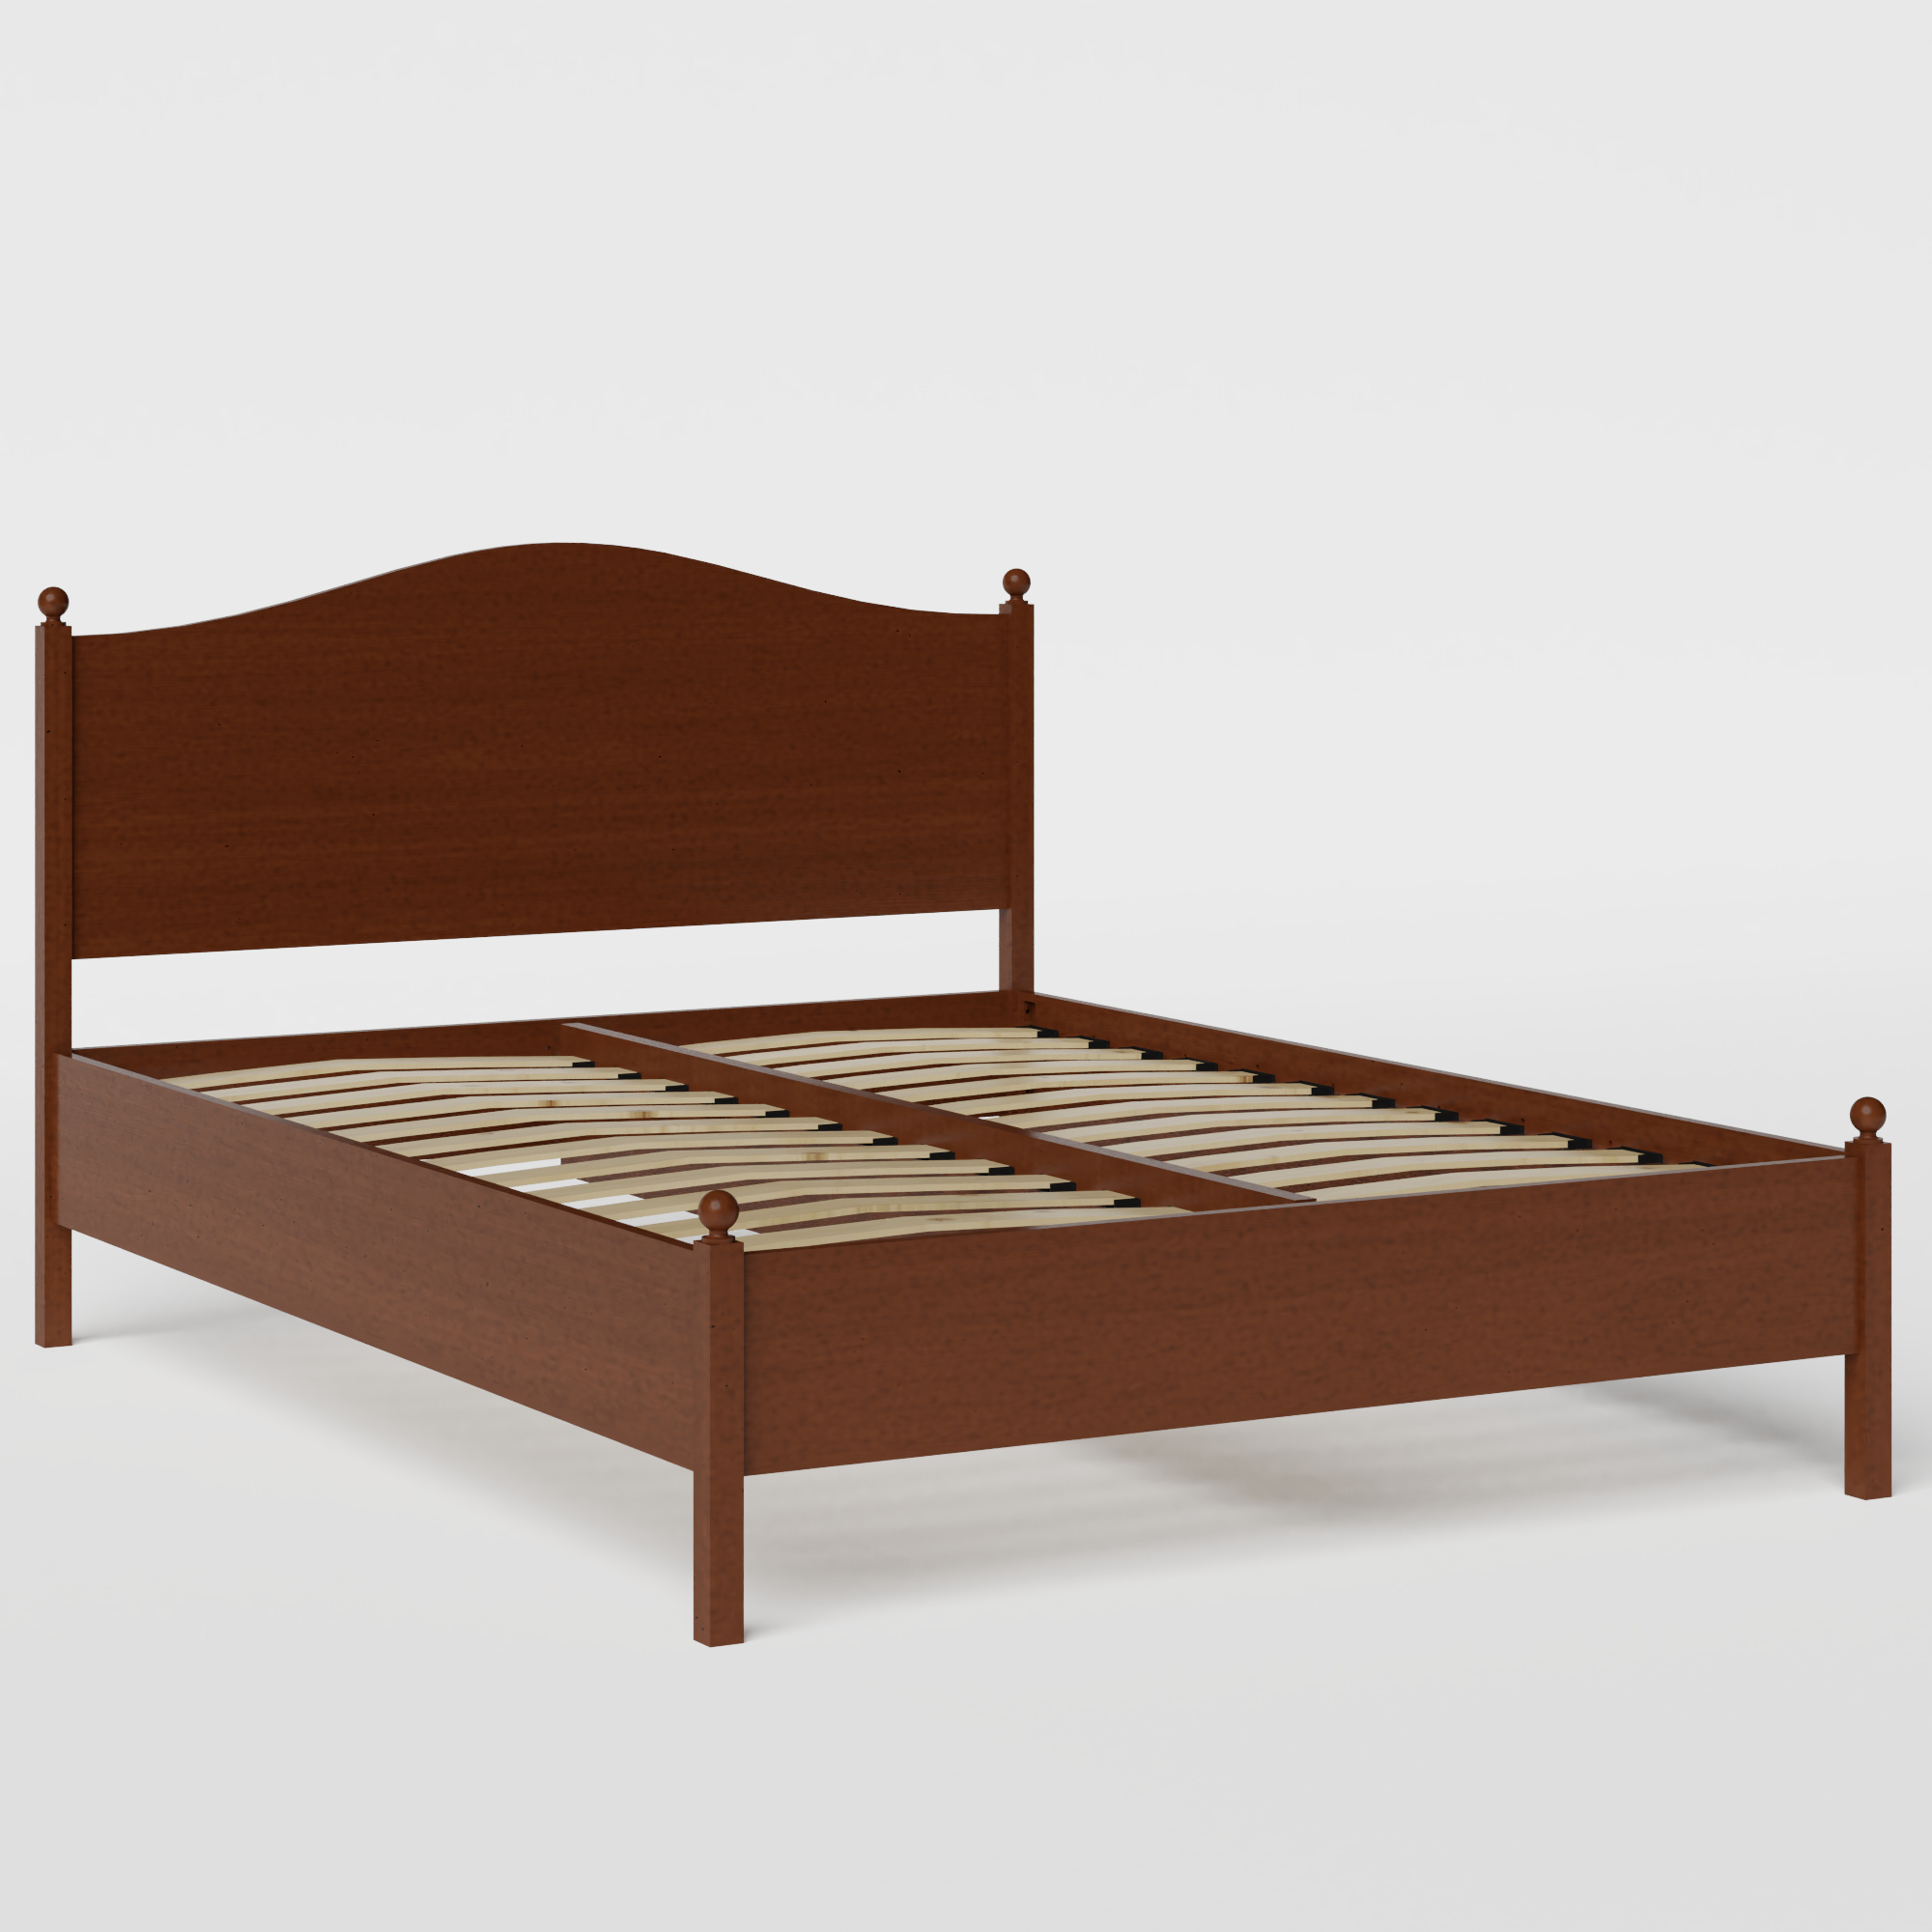 Brady houten bed in dark cherry